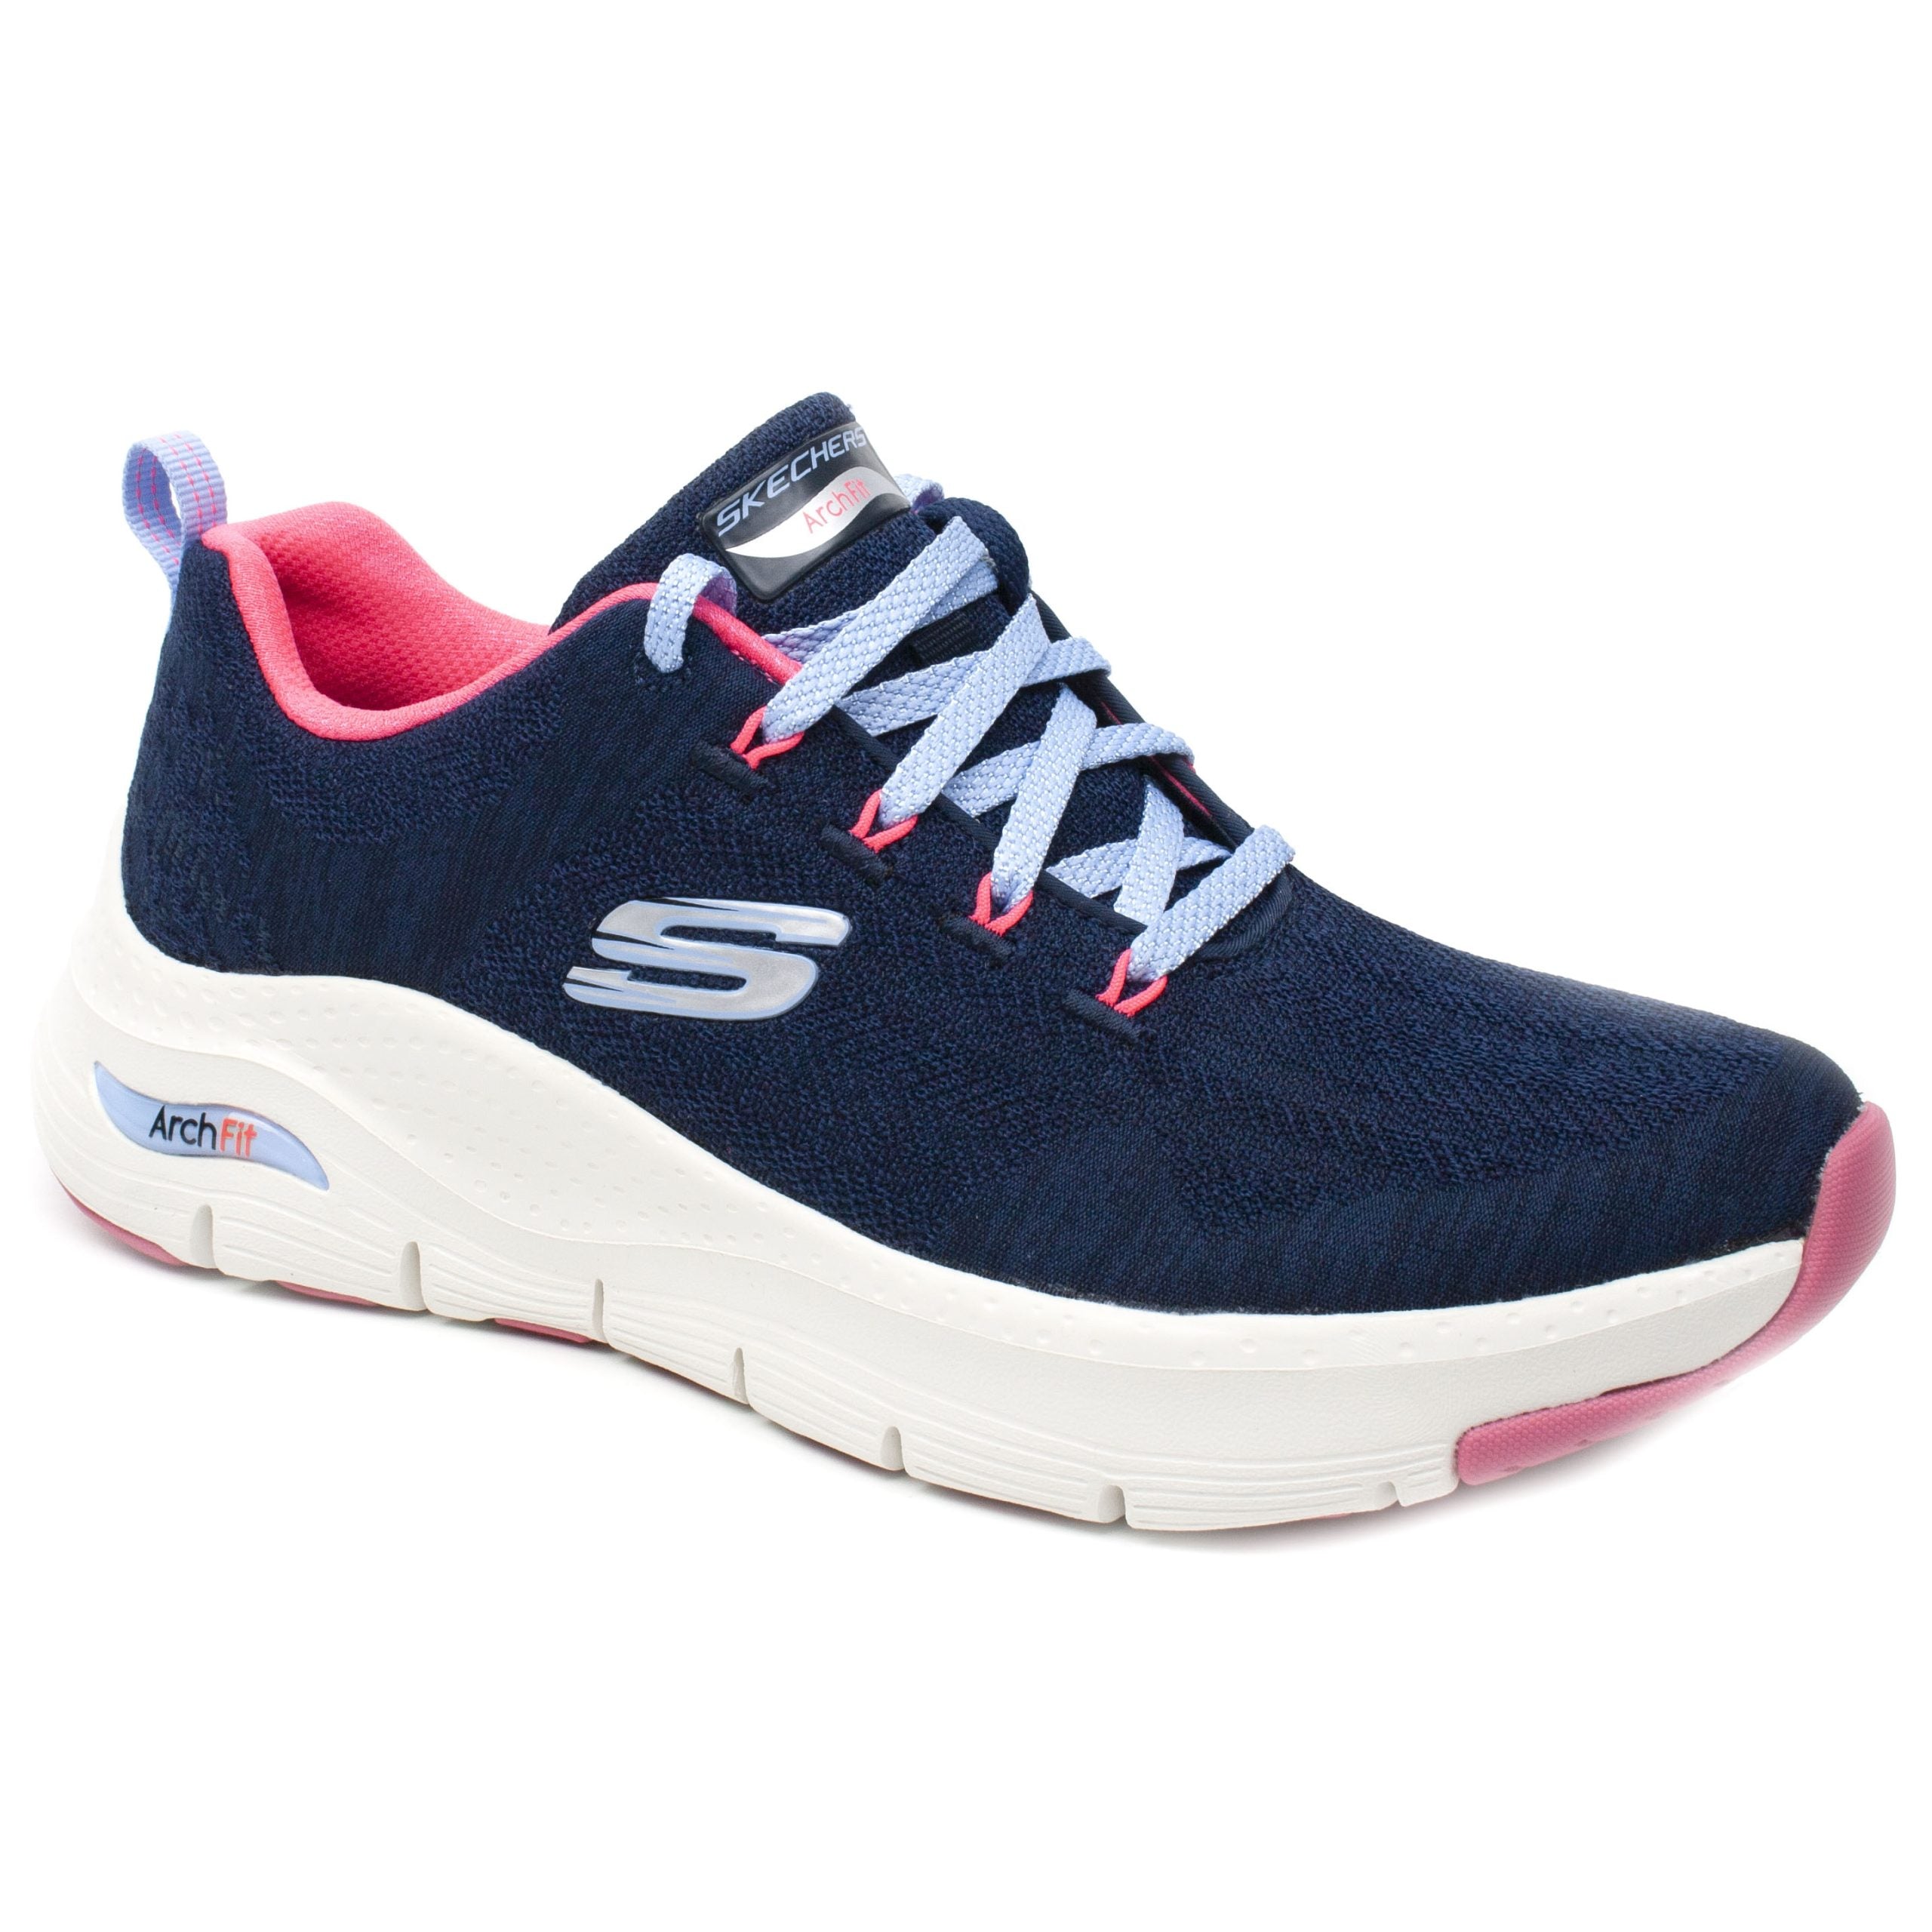 Skechers pantofi dama sport 149414 arch fit bleumarin ID2451-BLM